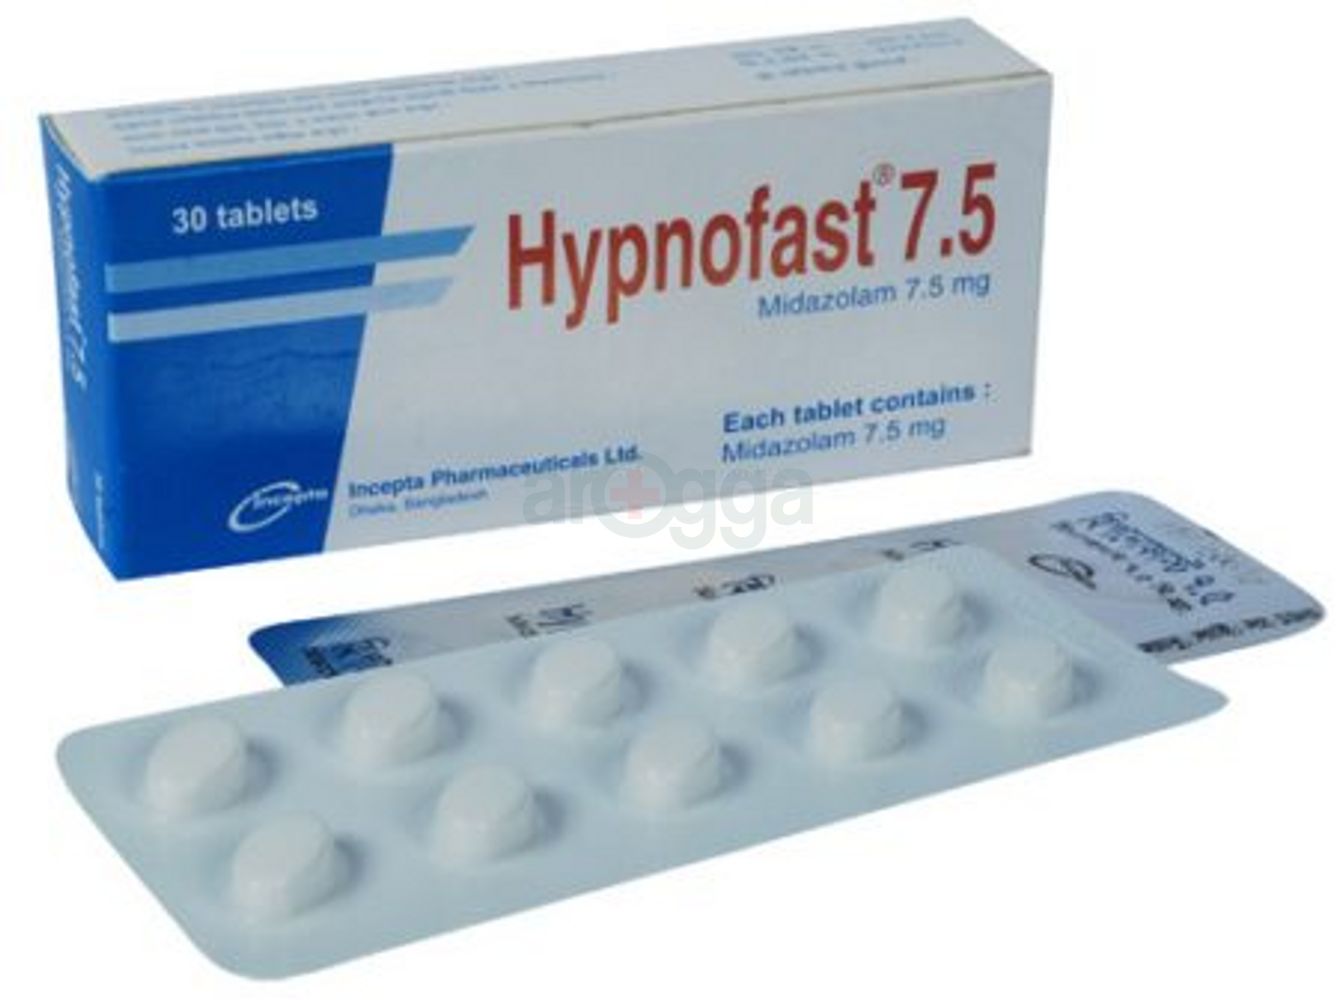 Hypnofast 7.5